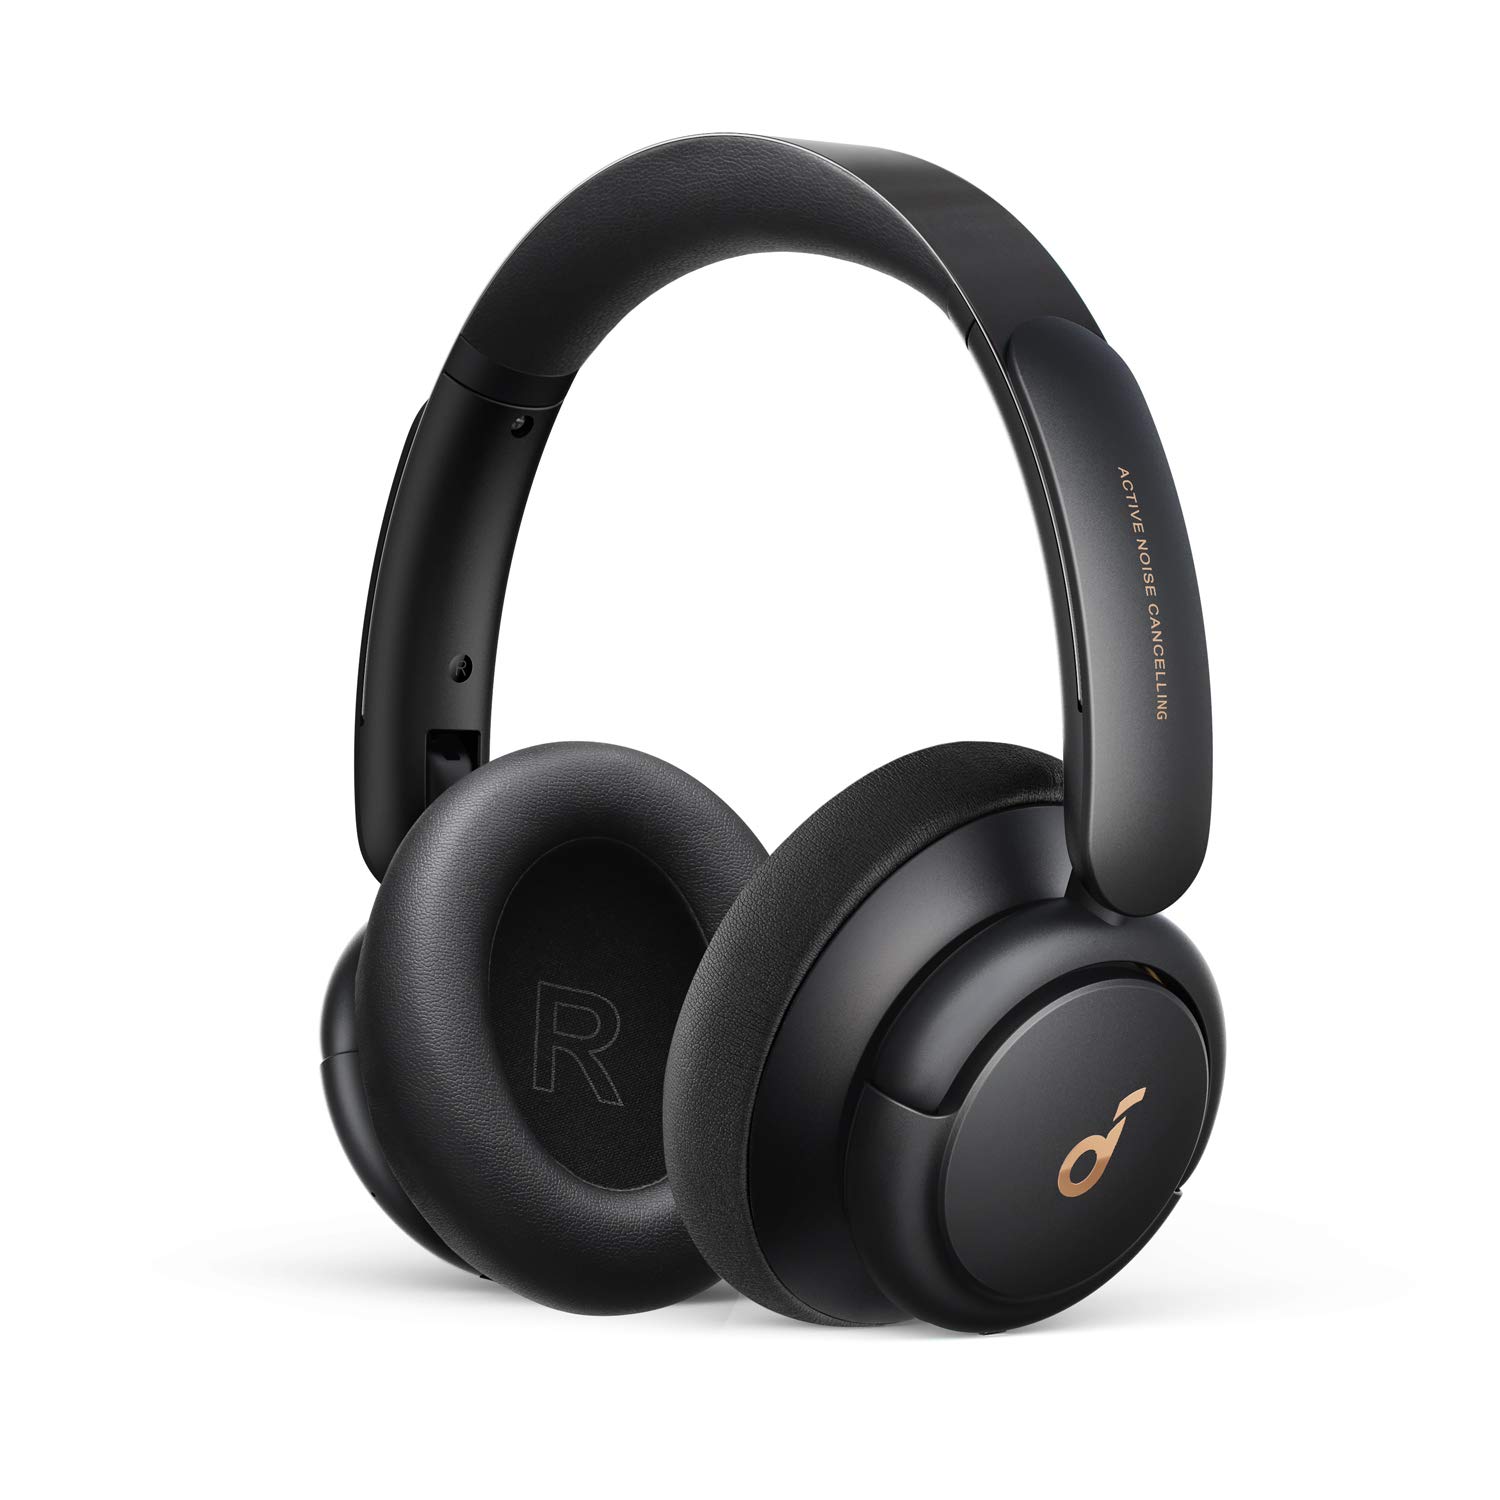 Soundcore by Life Q30 混合主动降噪耳机，具有多种模式、高分辨率声音、通过应用程序自定义 EQ、40 小时播放时间、佩戴舒适、蓝牙耳机、多点连接